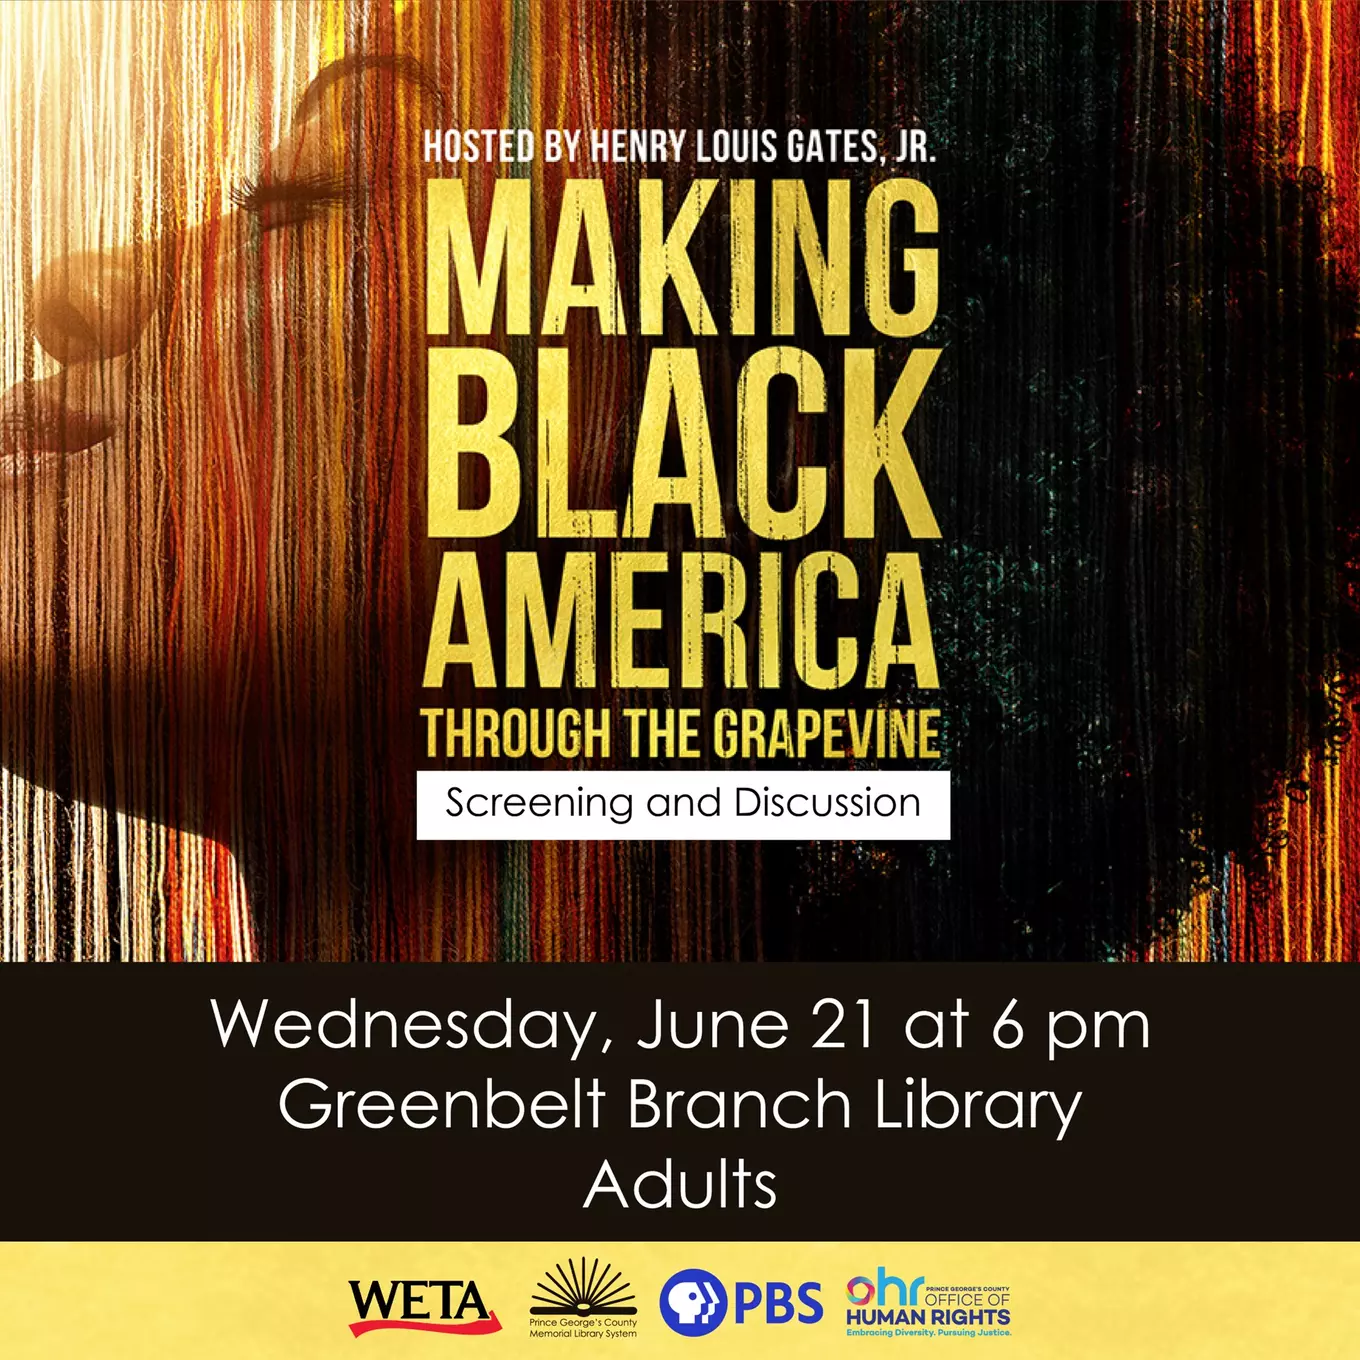 Making Black America Event Flyer 